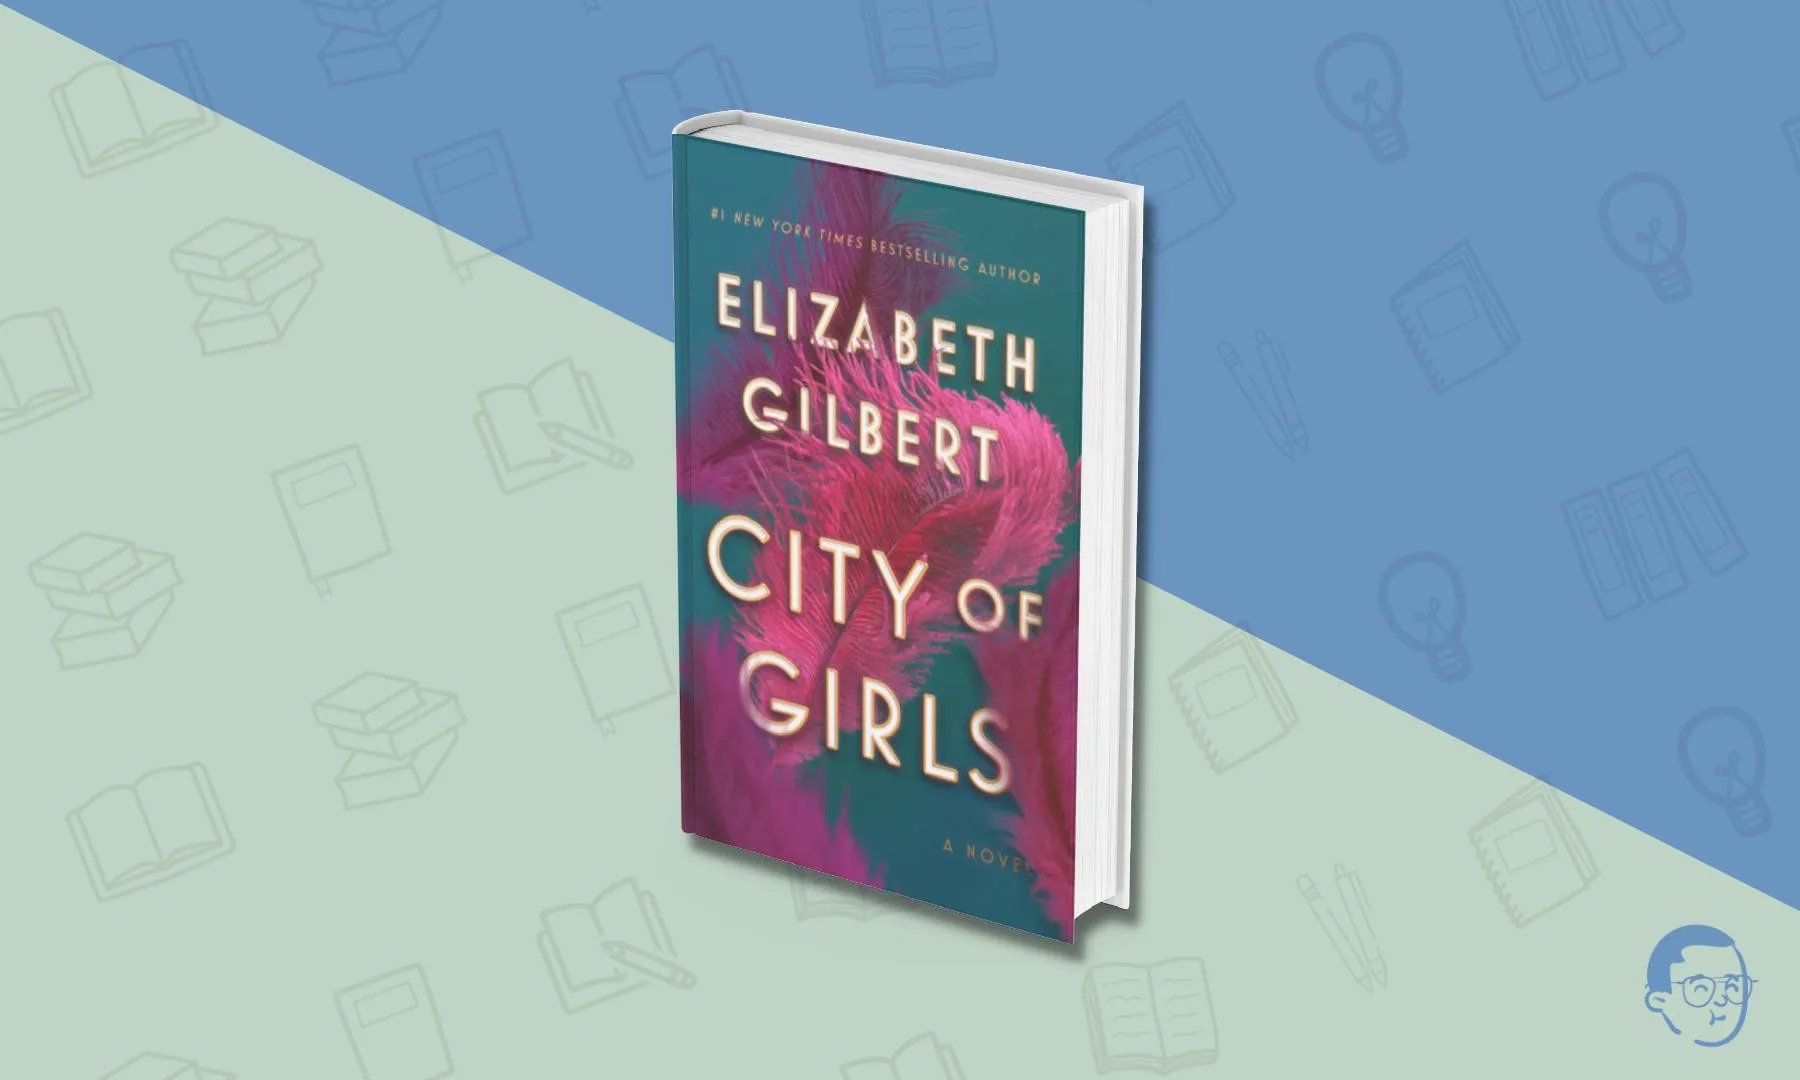 City of Girls by Elizabeth Gilbert